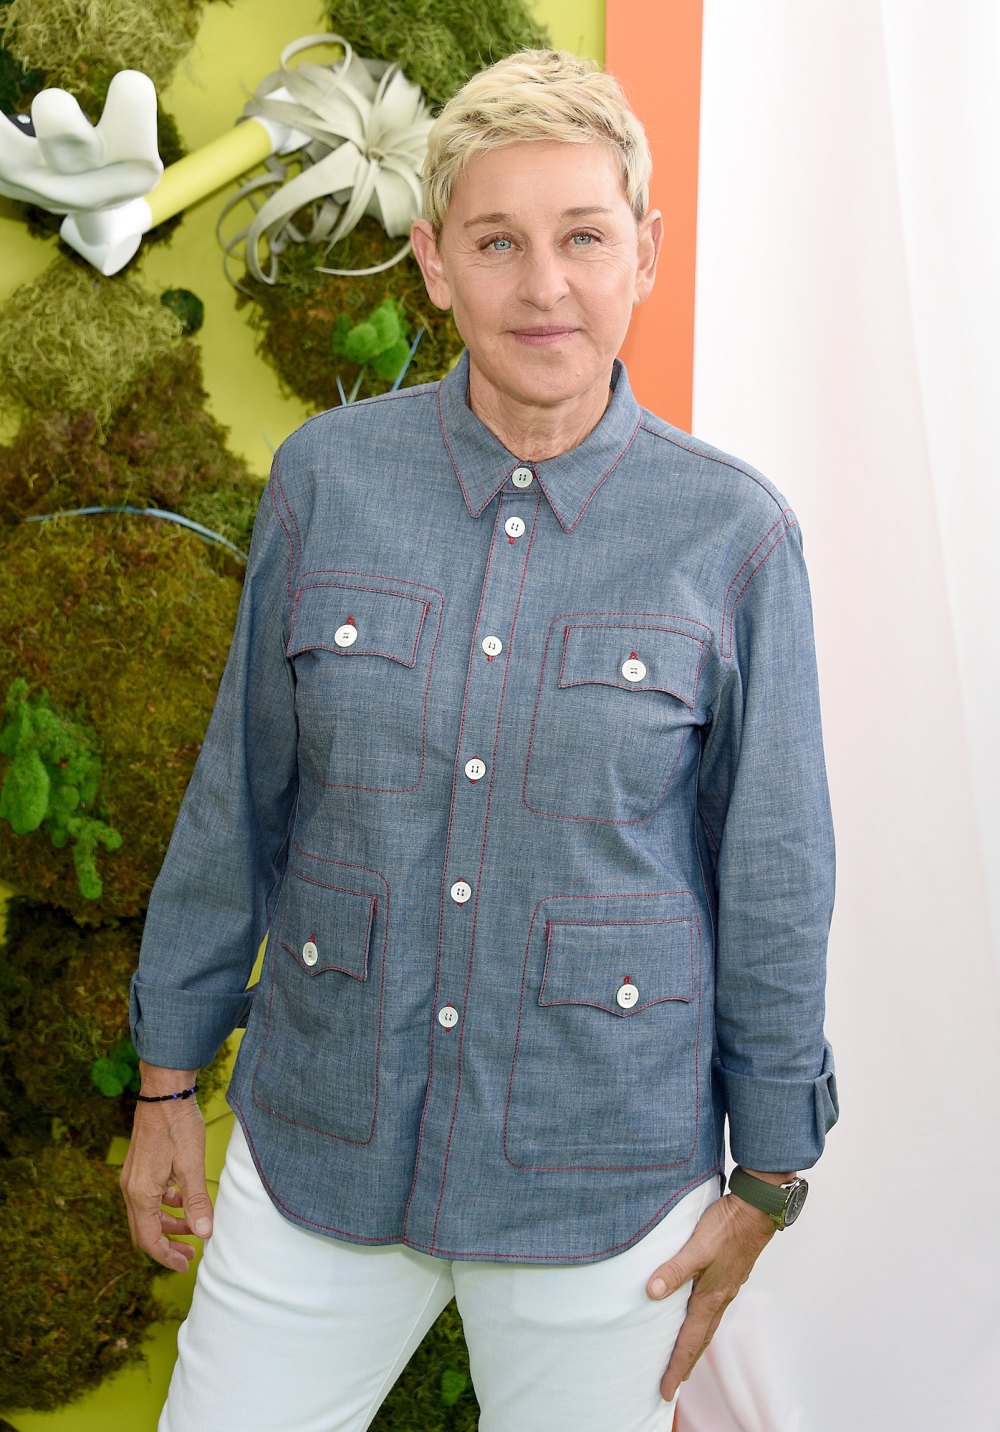 Ellen DeGeneres Rebuffs Criticism I Am Many Things But I Am Not Mean